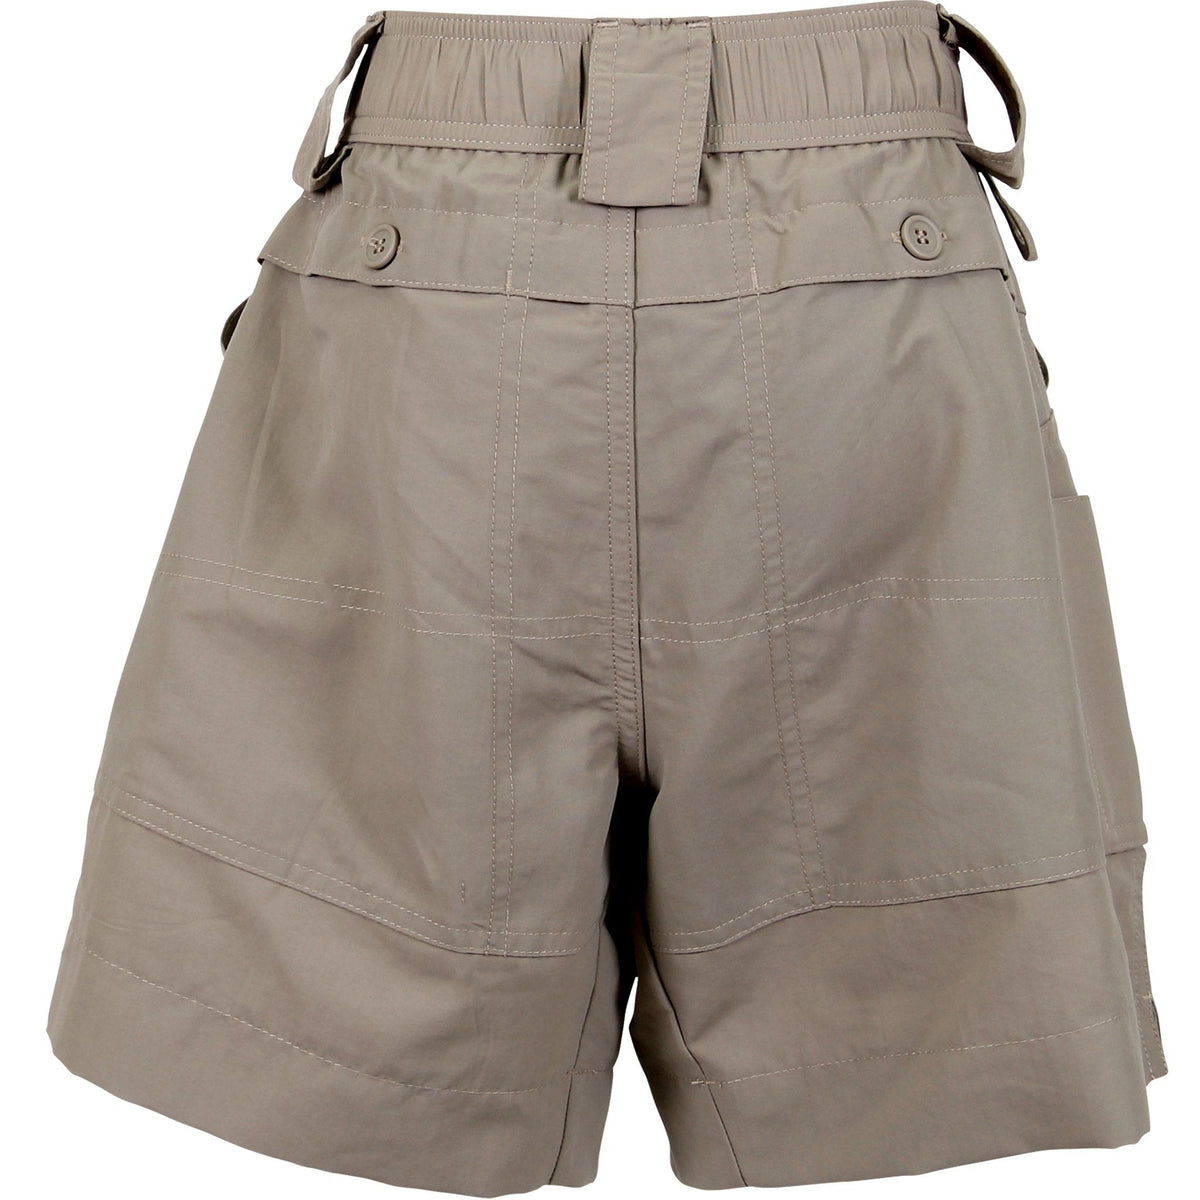 AFTCO Boys Original Fishing Shorts (Khaki - 26)